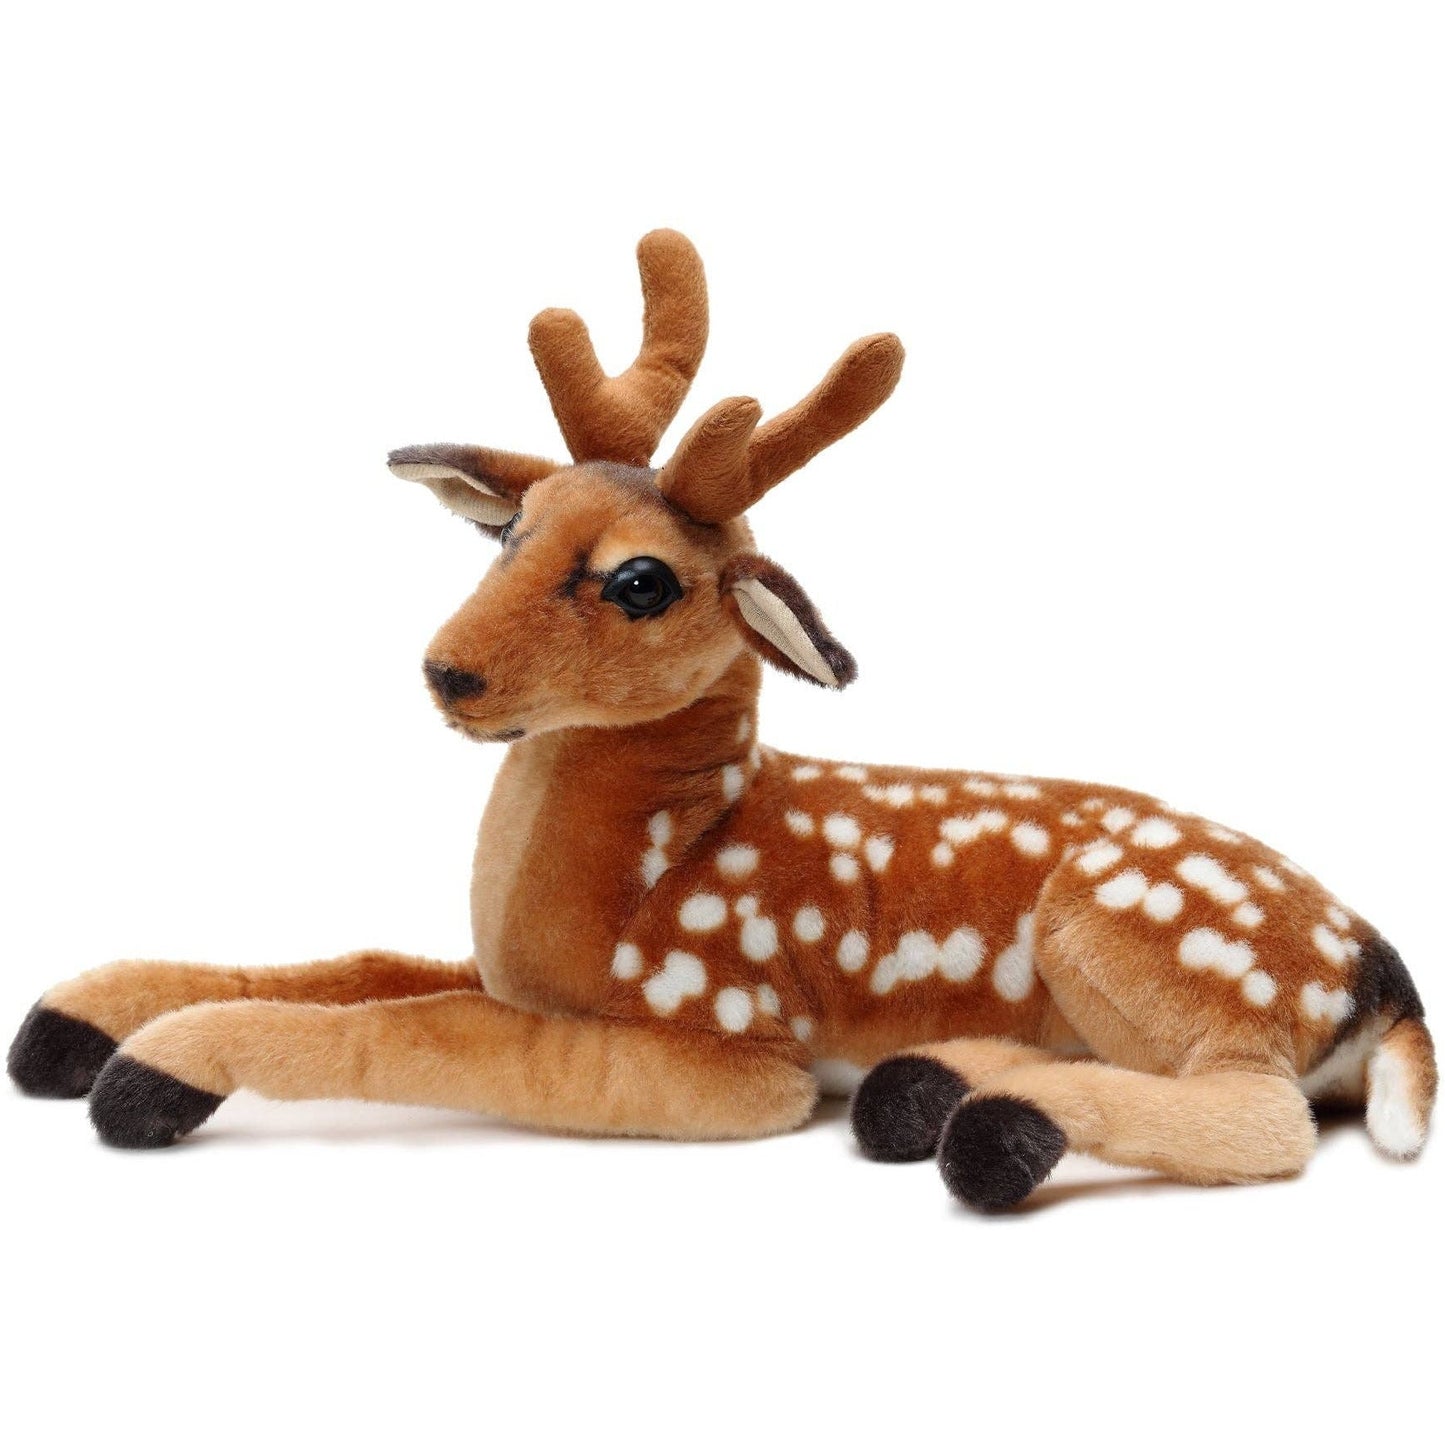 Dorbin The Deer | 21 Inch Stuffed Animal Plush